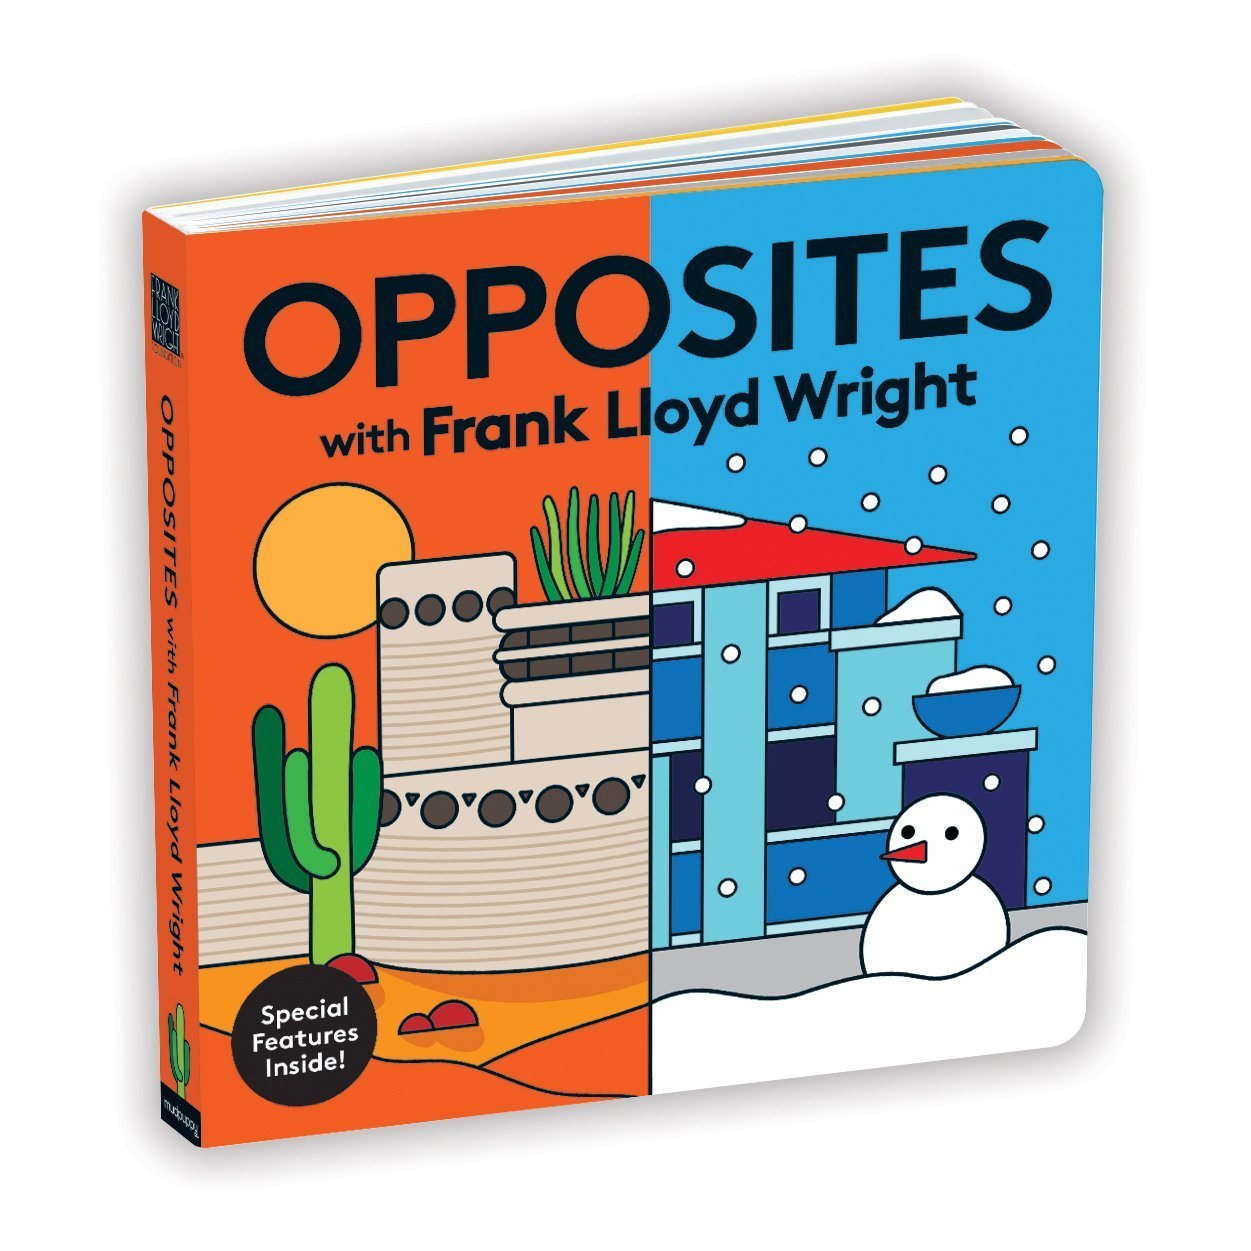 Wright　Ltd®　Frank　Opposites　with　Safari　Lloyd　Mudpuppy